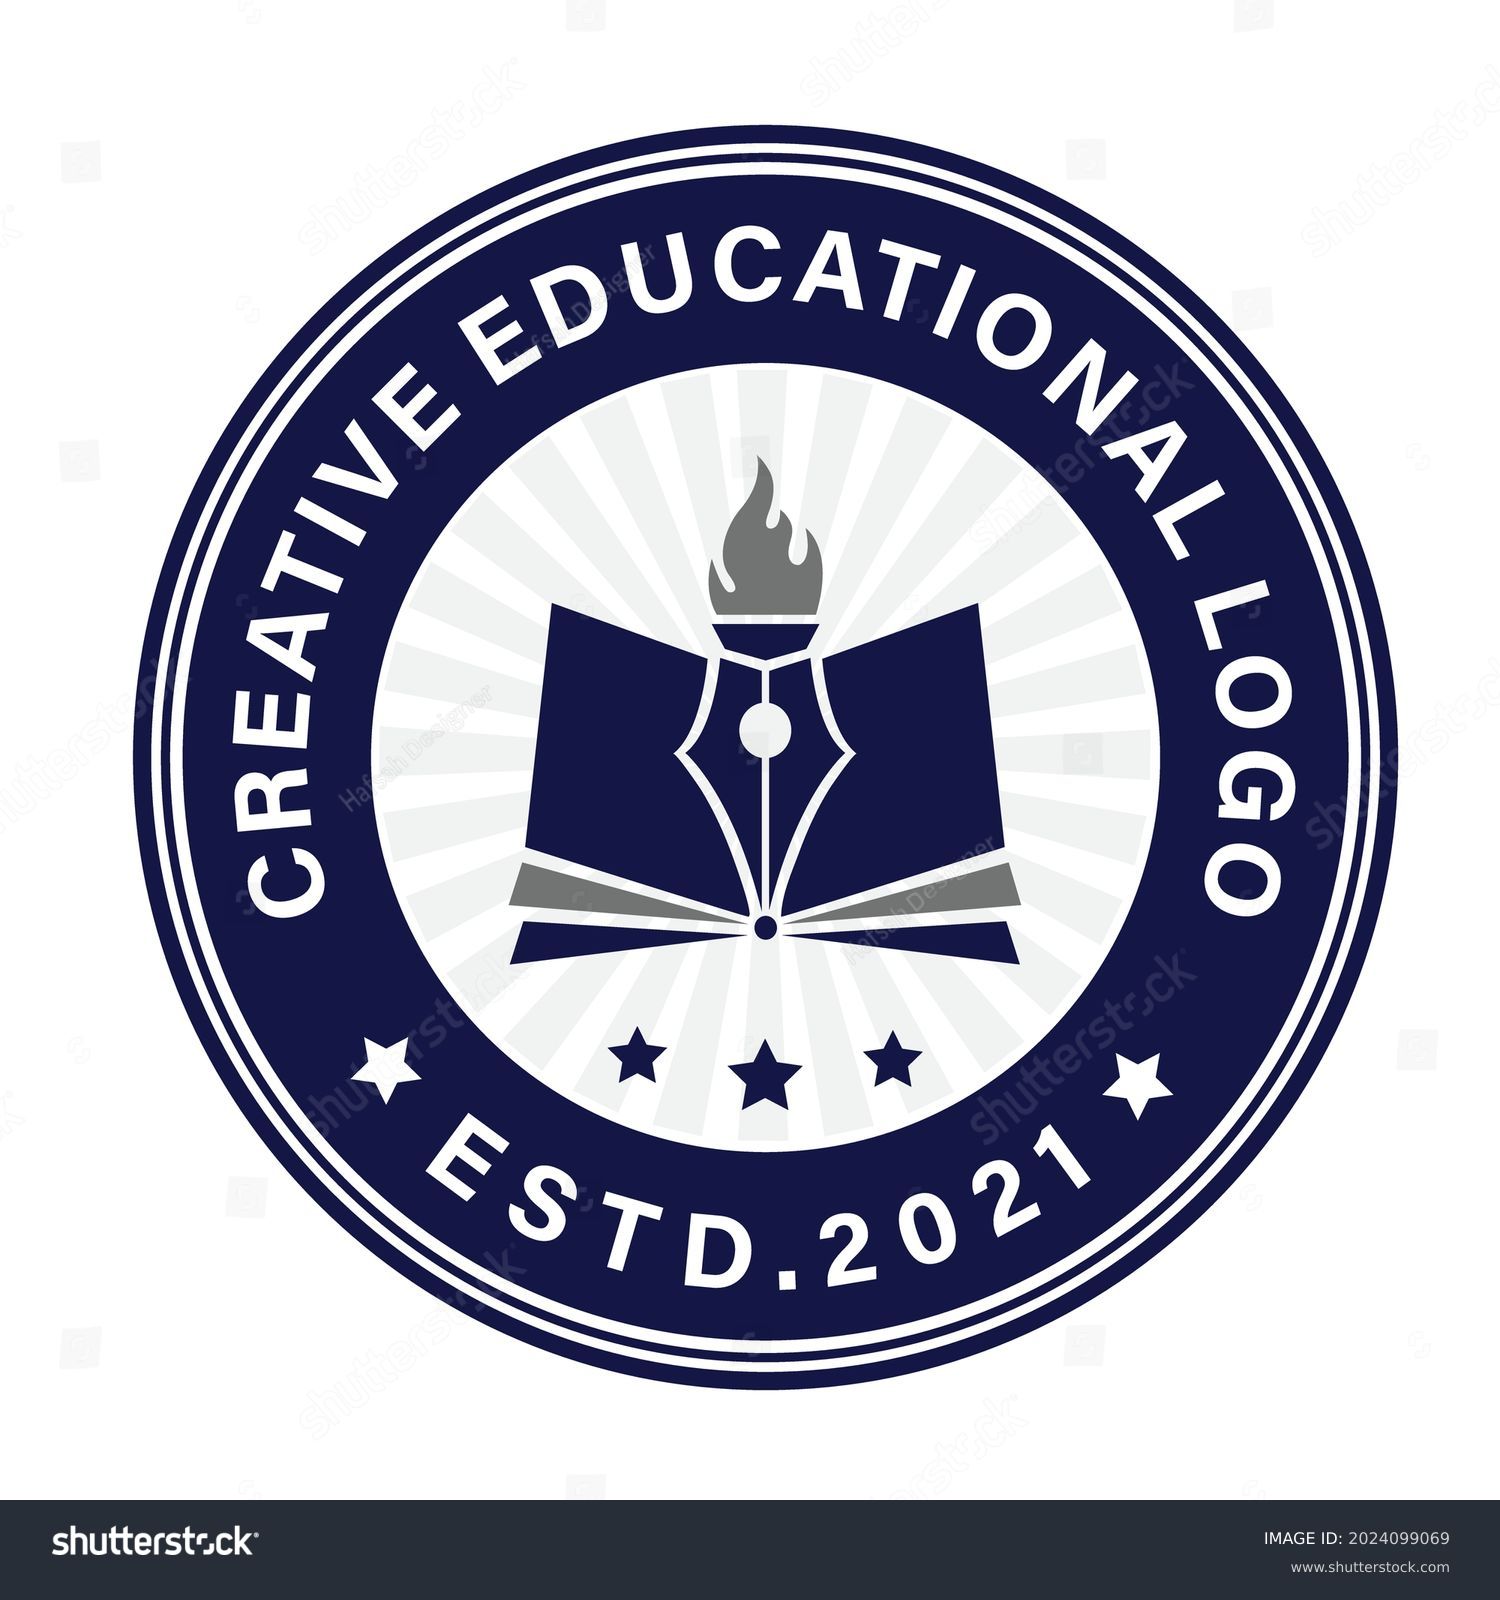 creative education logo